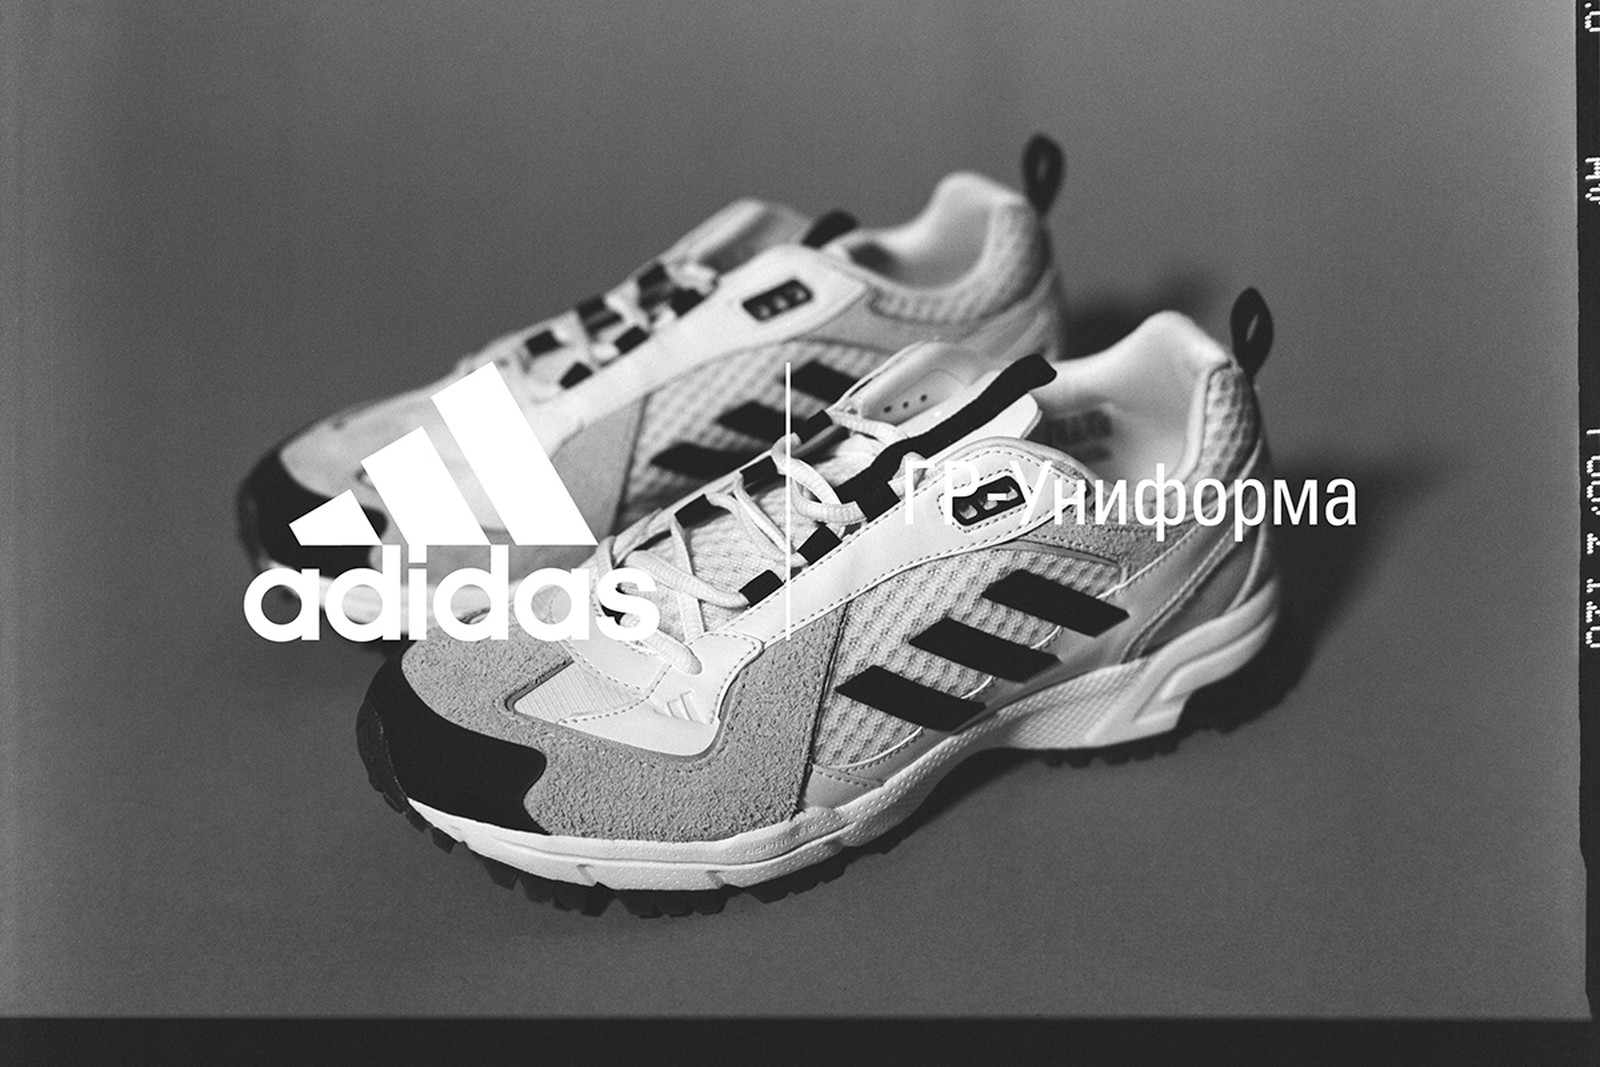 Gosha Rubchinskiy Returns with New adidas Project